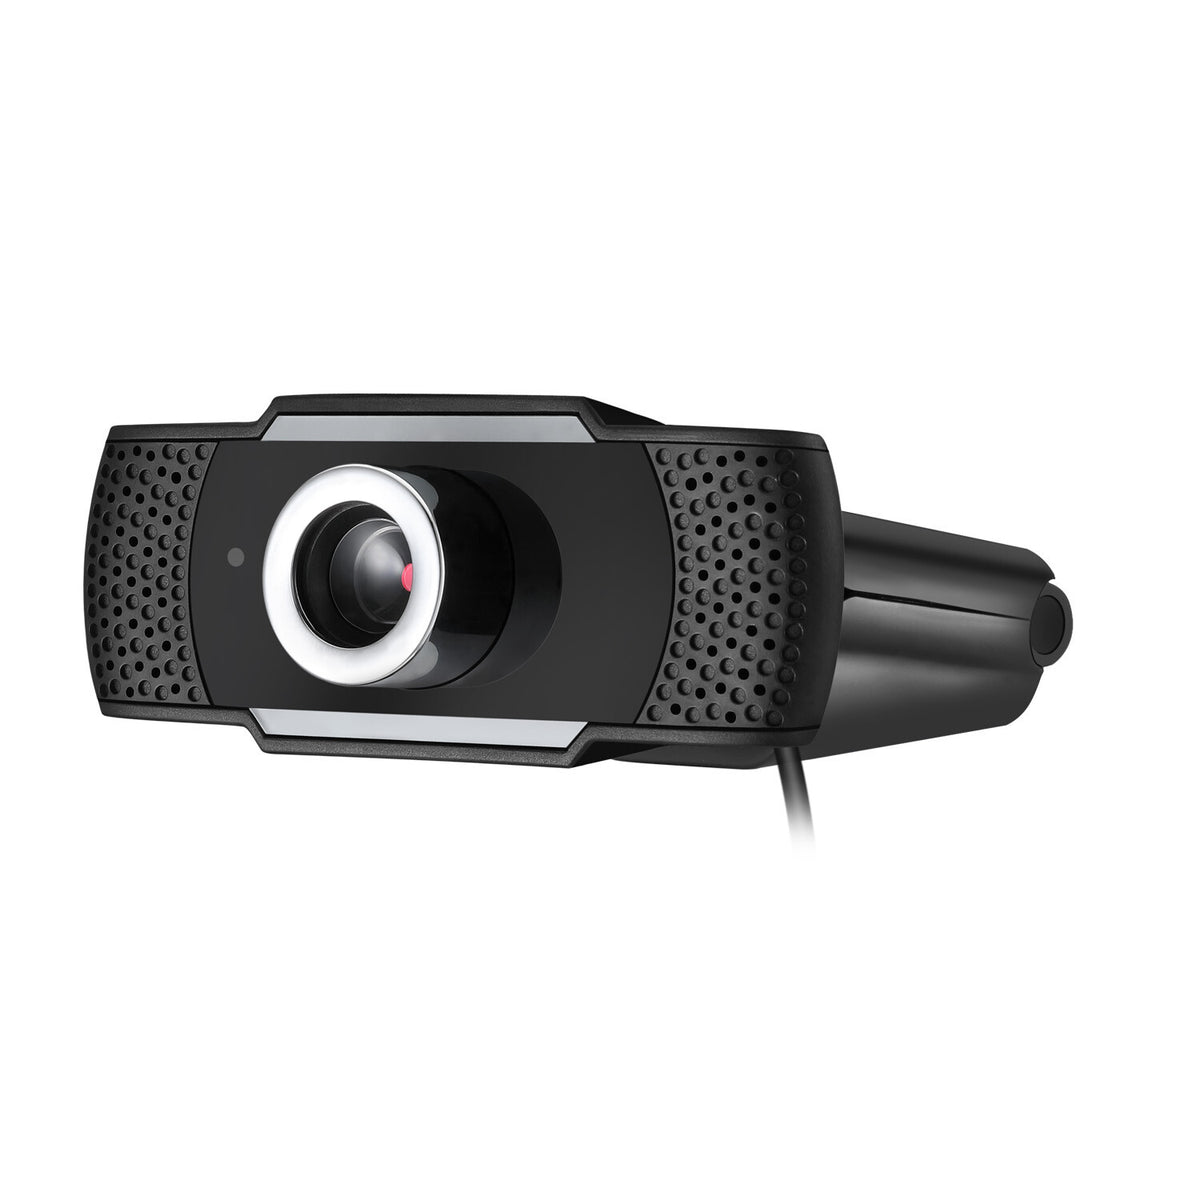 Adesso CyberTrack H4 - 2.1 MP 1920 x 1080 pixels USB webcam